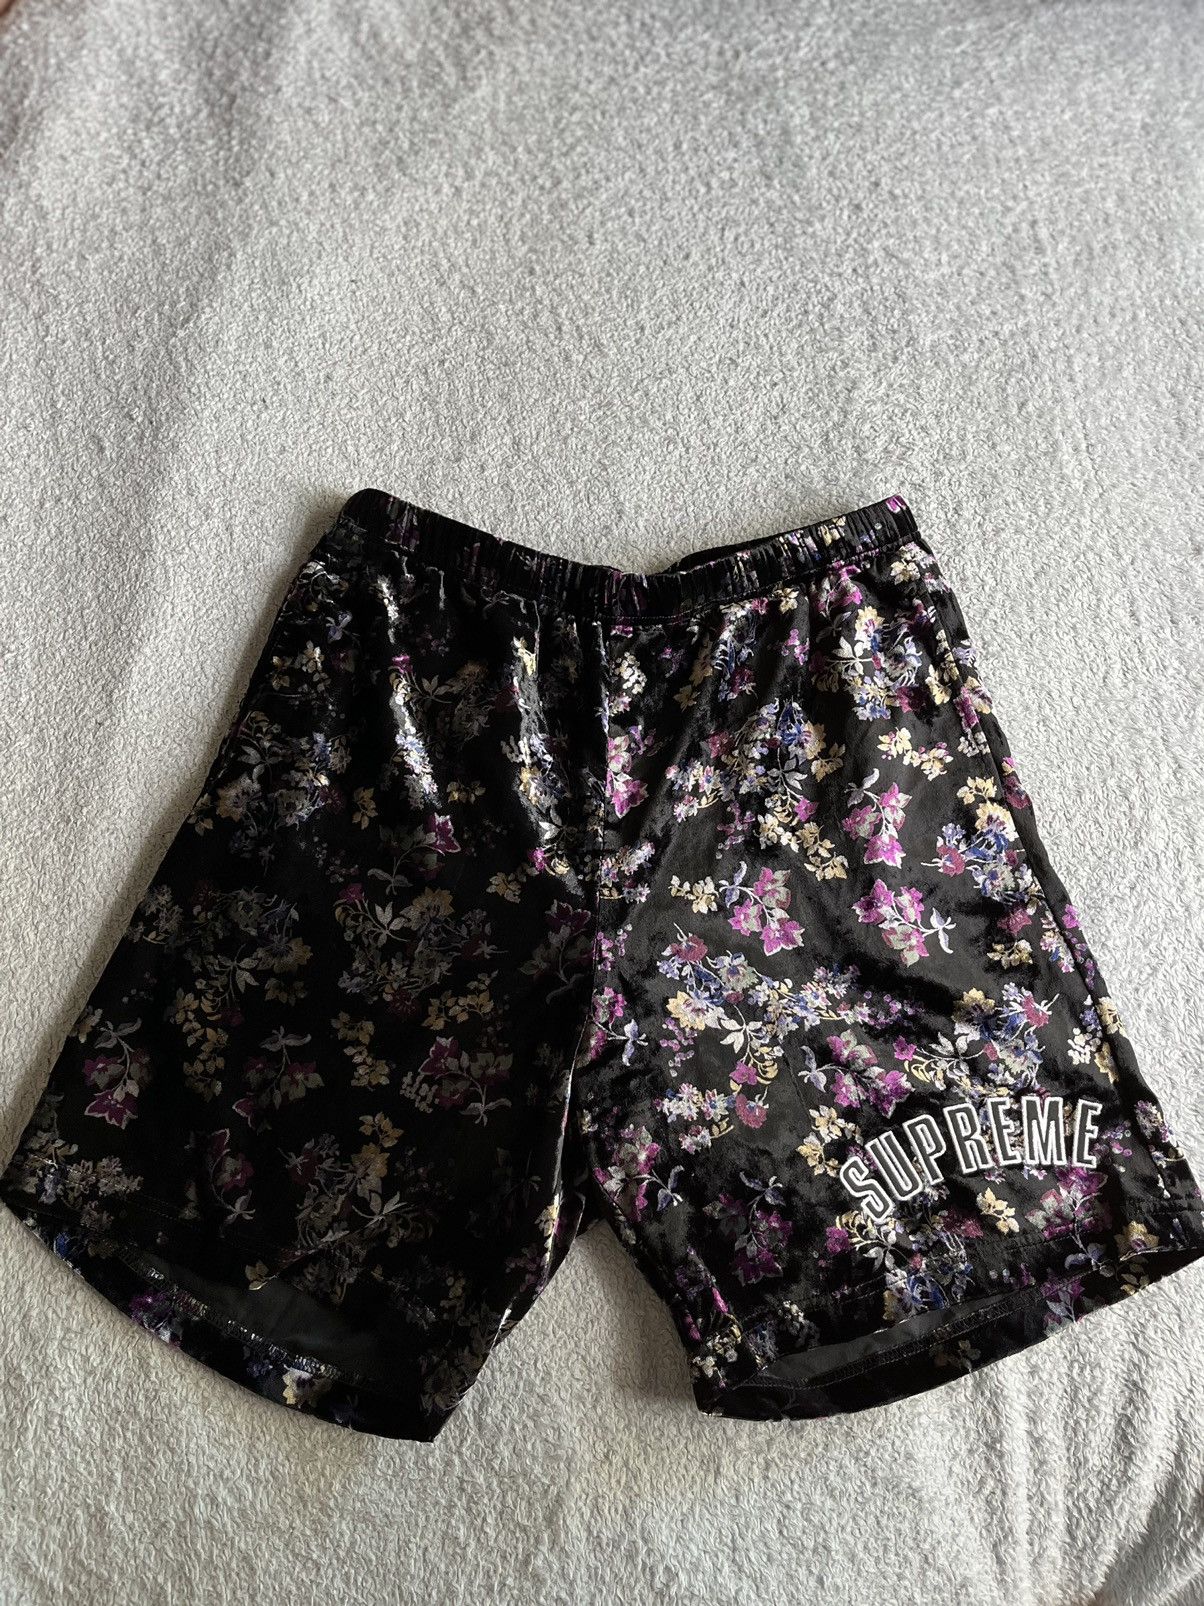 Supreme Supreme Floral Velour Shorts | Grailed